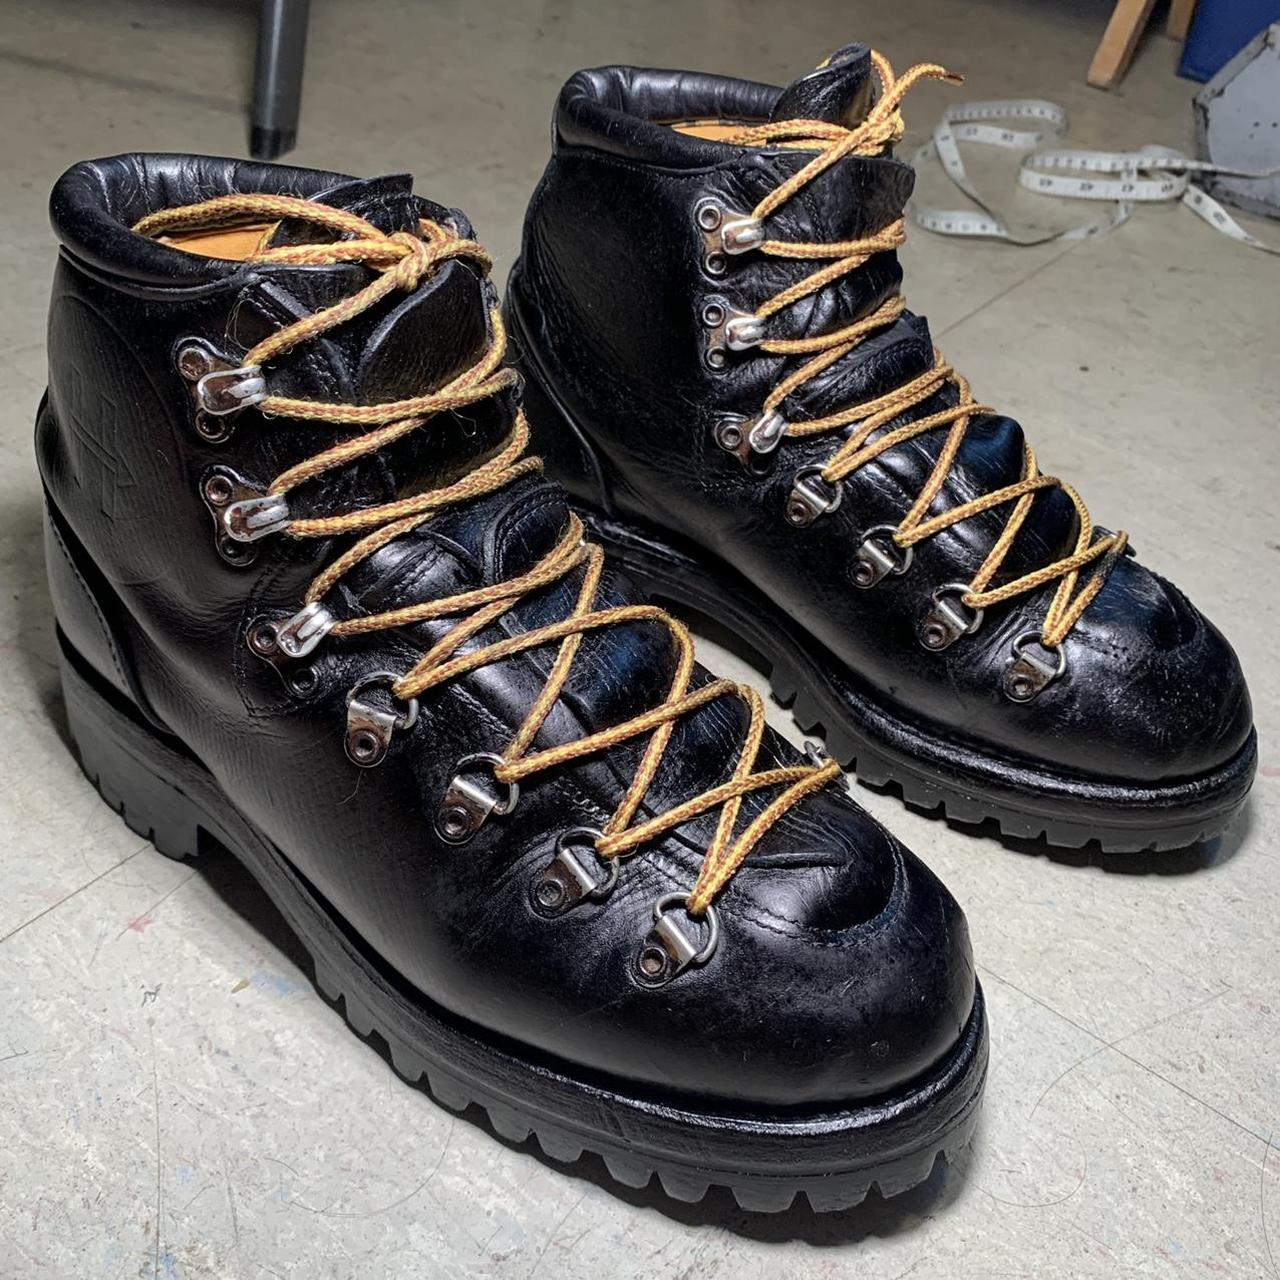 Vintage Black Leather Hiking Boot (Guidi 20... - Depop